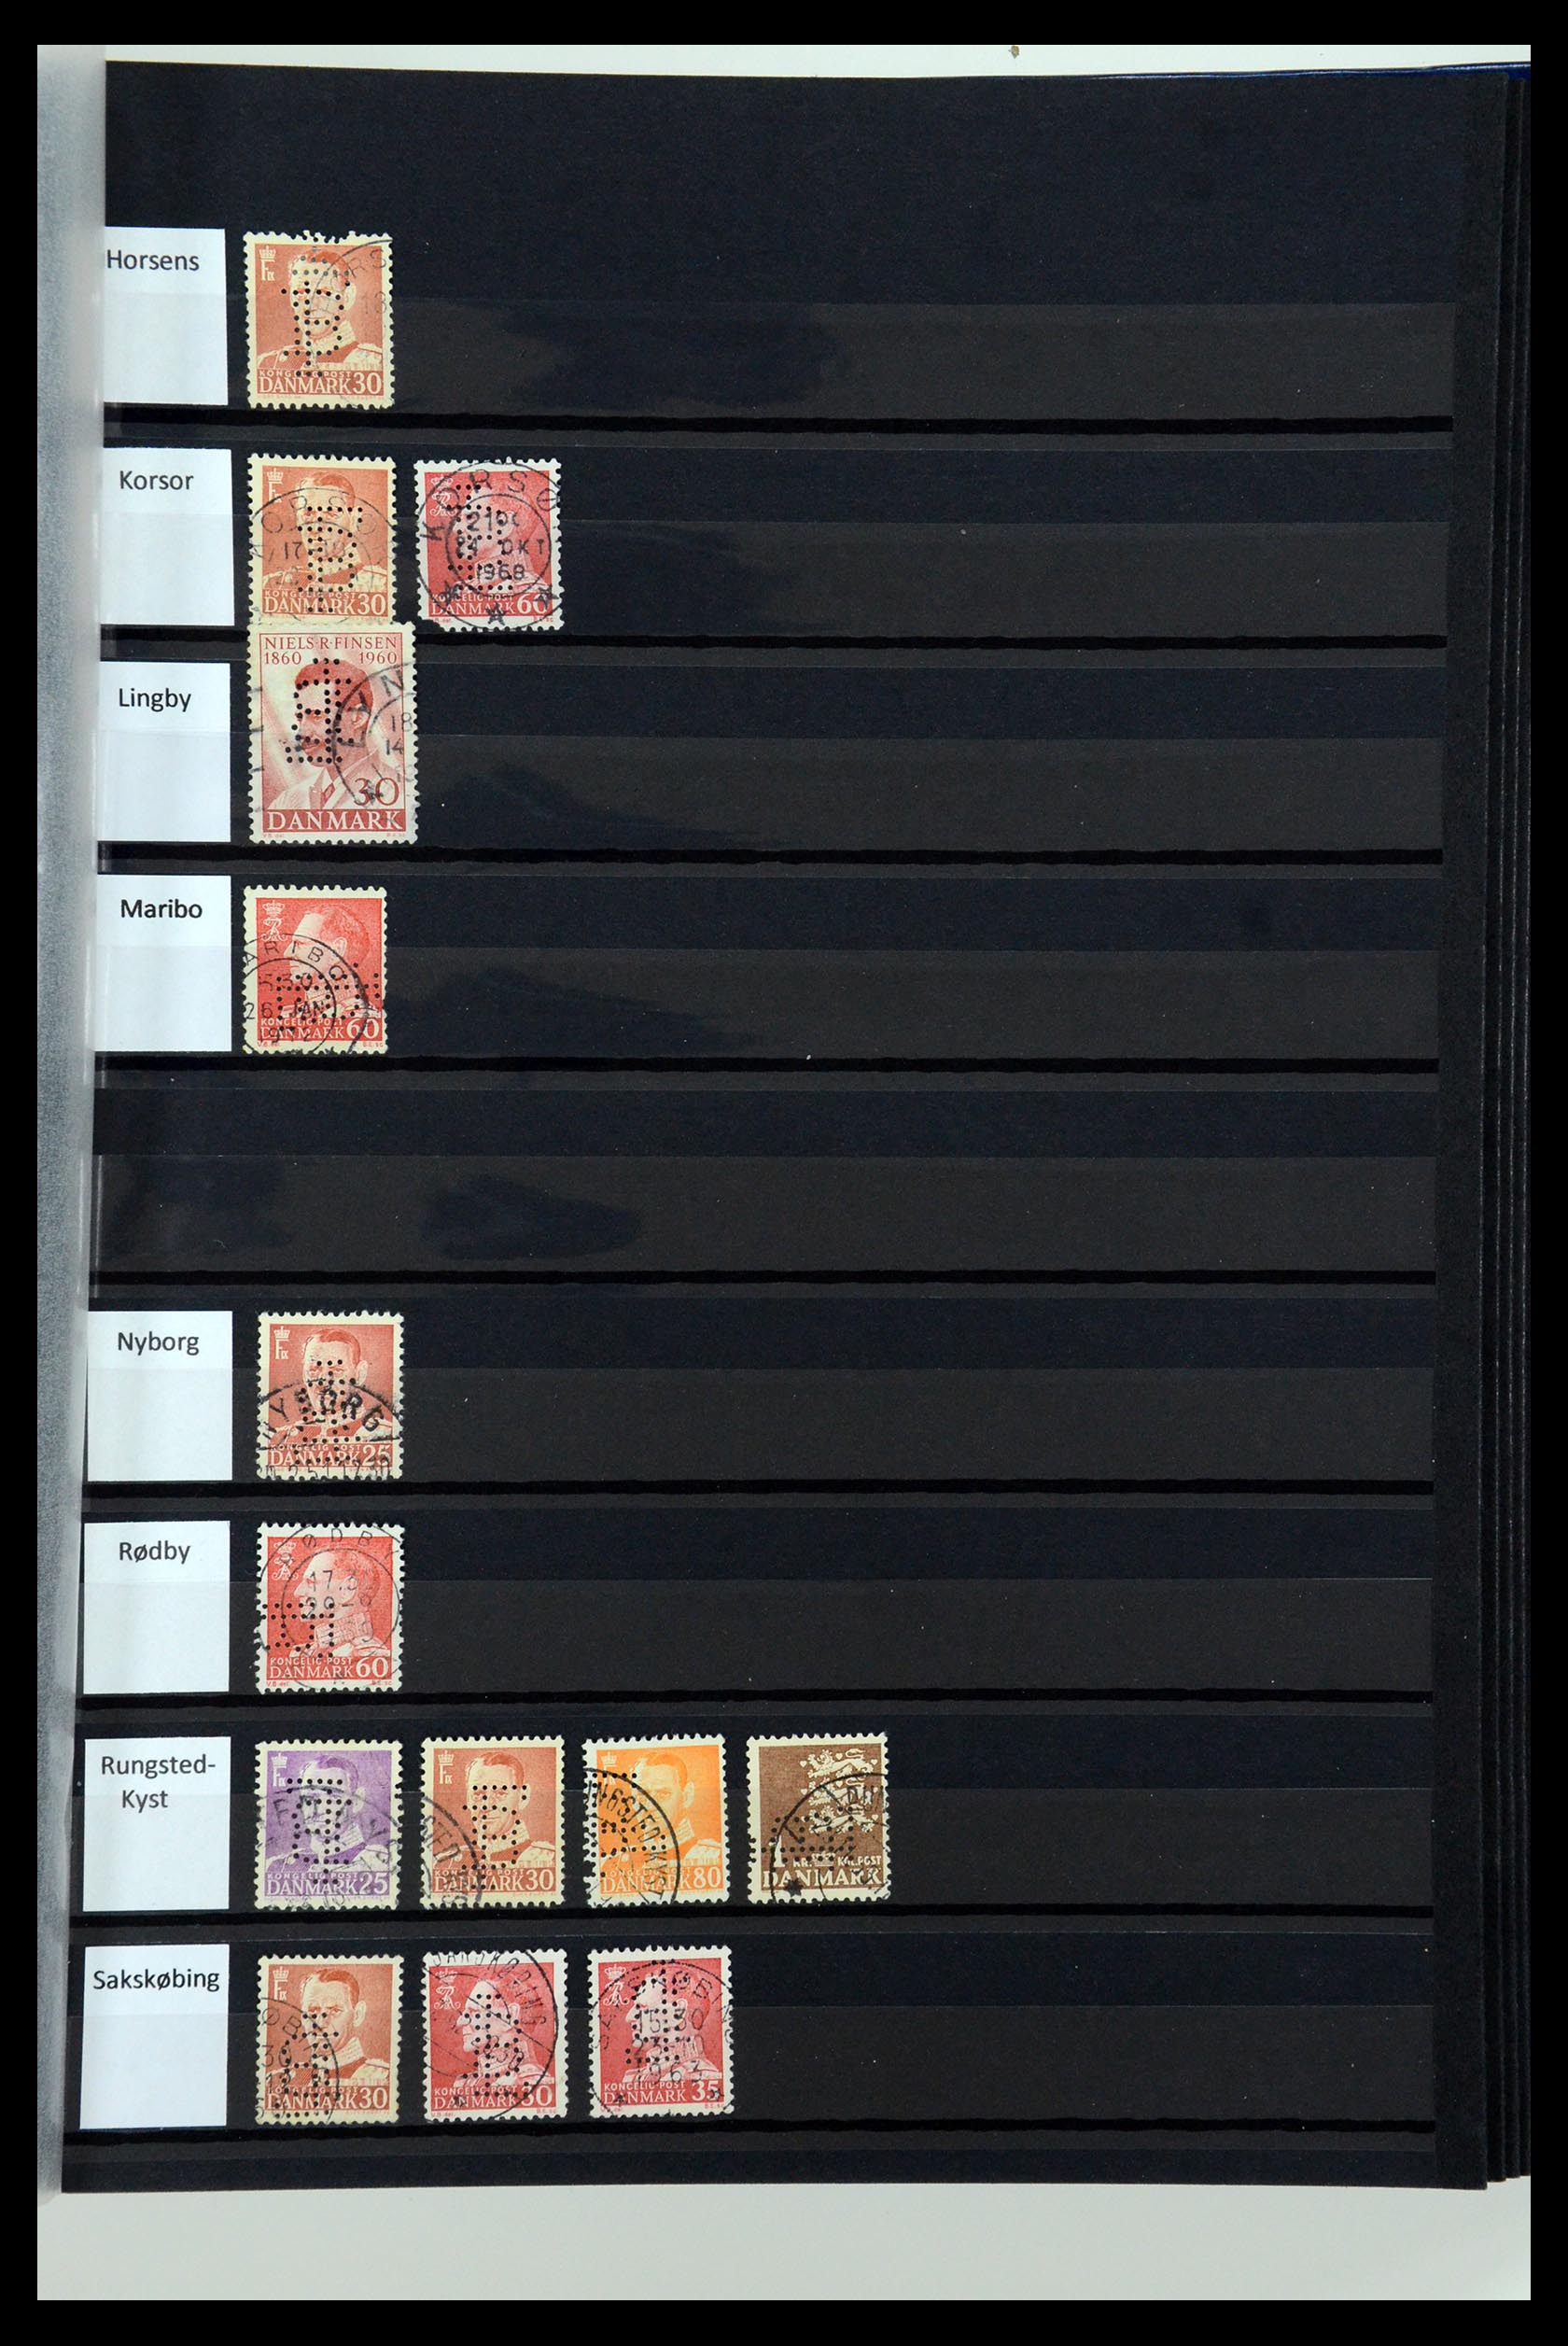 36396 088 - Stamp collection 36396 Denmark perfins.